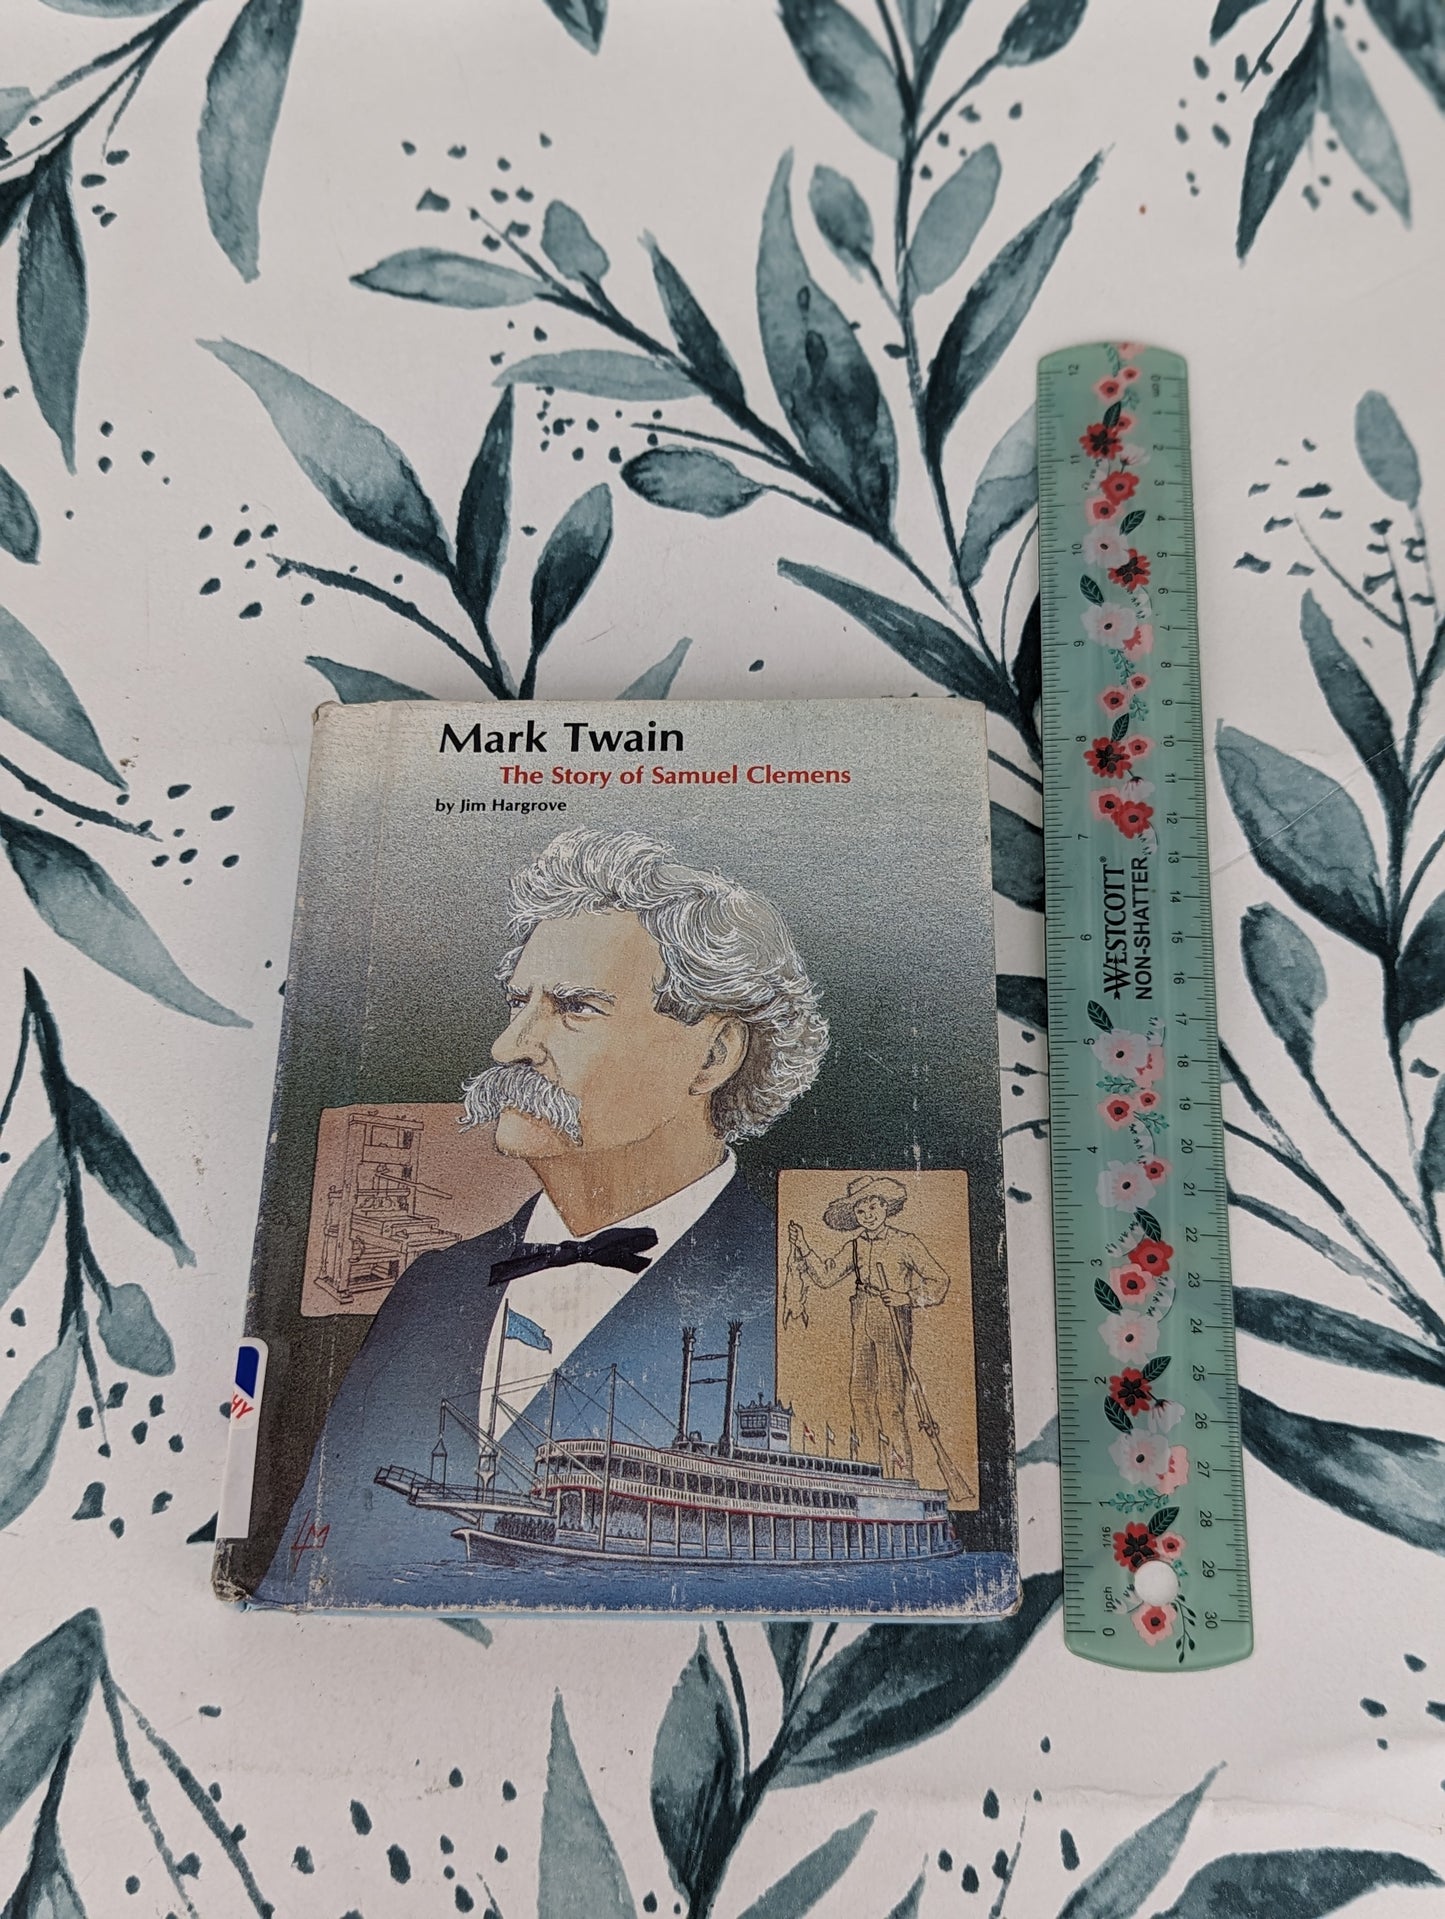 Mark Twain: The Story of Samuel Clemens